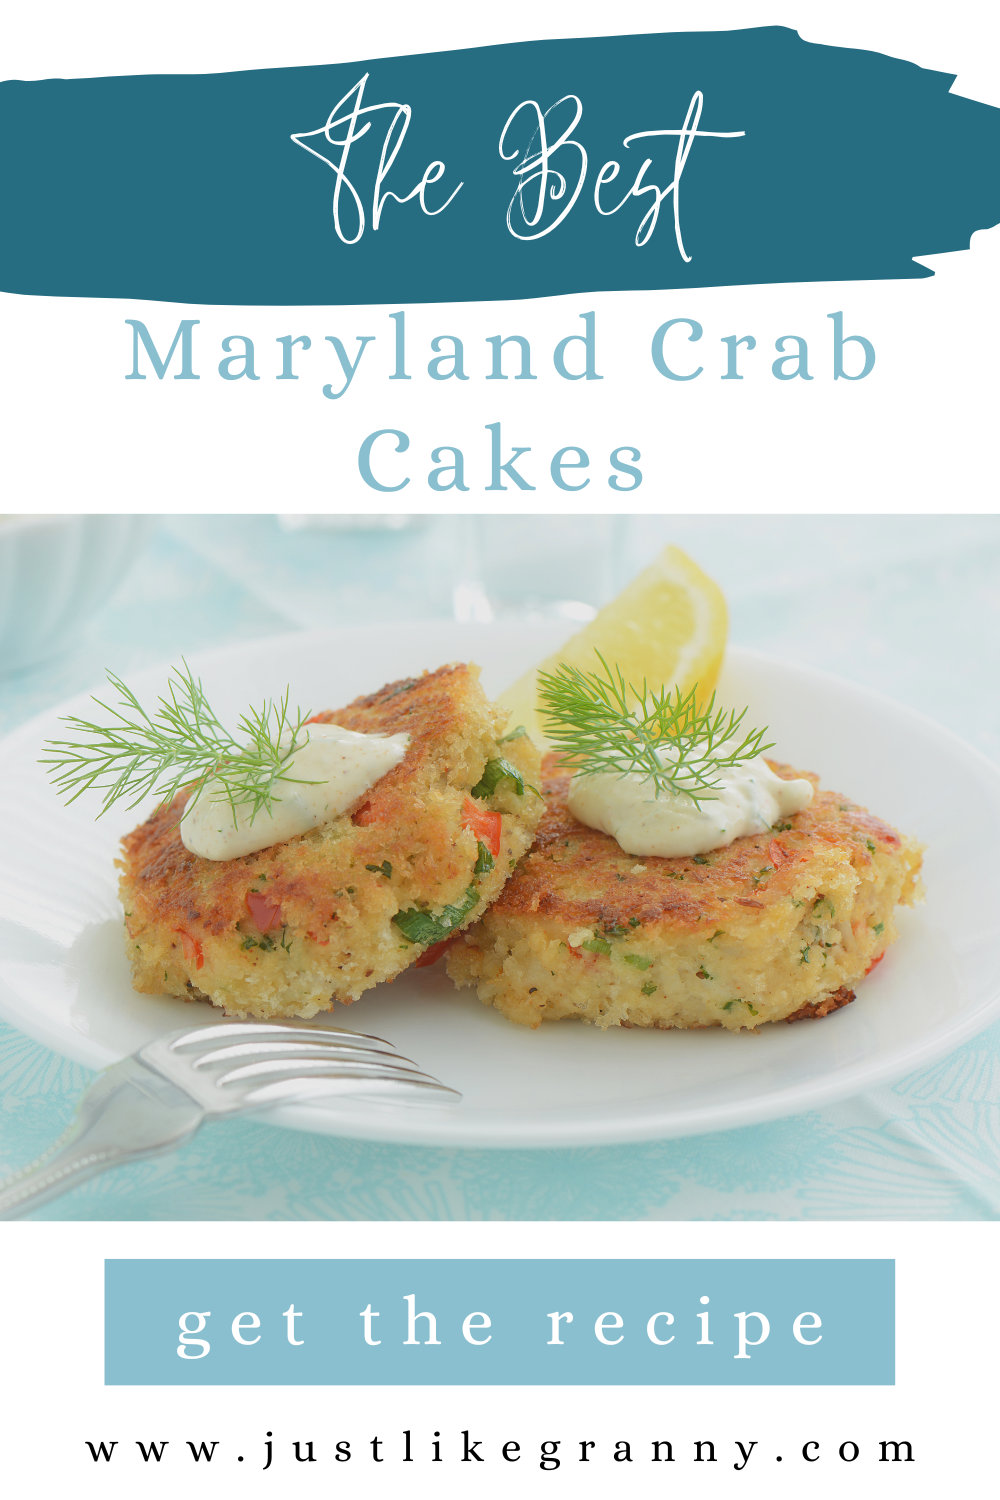 Best Crab Cakes Recipe - How to Make Crab Cakes